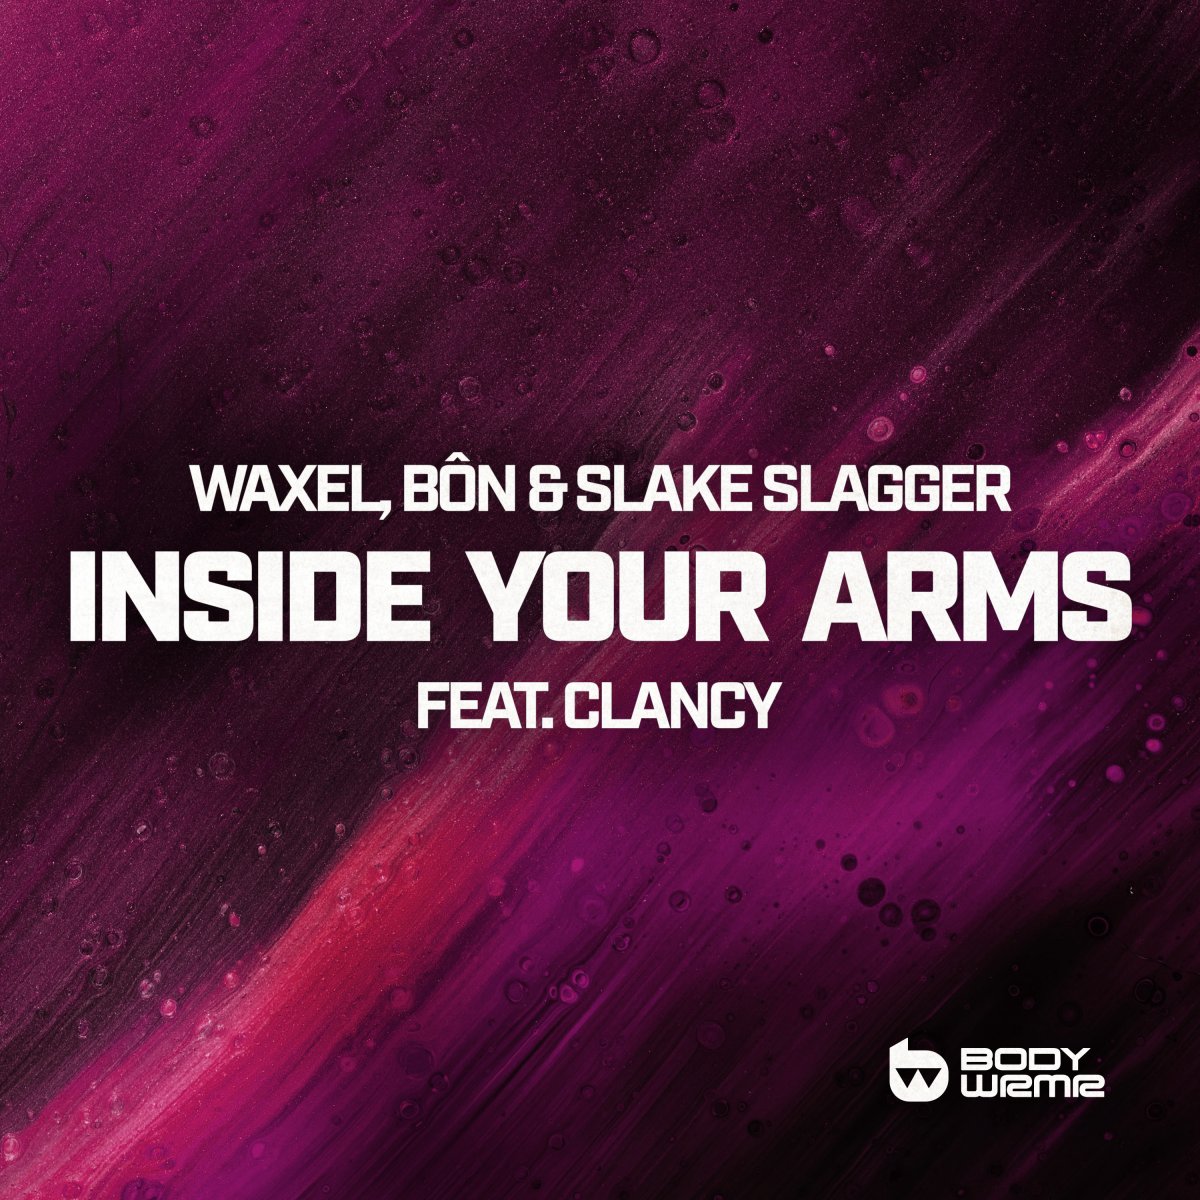 Inside Your Arms - Waxel⁠, BÔN⁠ & Slake Slagger⁠ feat. Clancy⁠